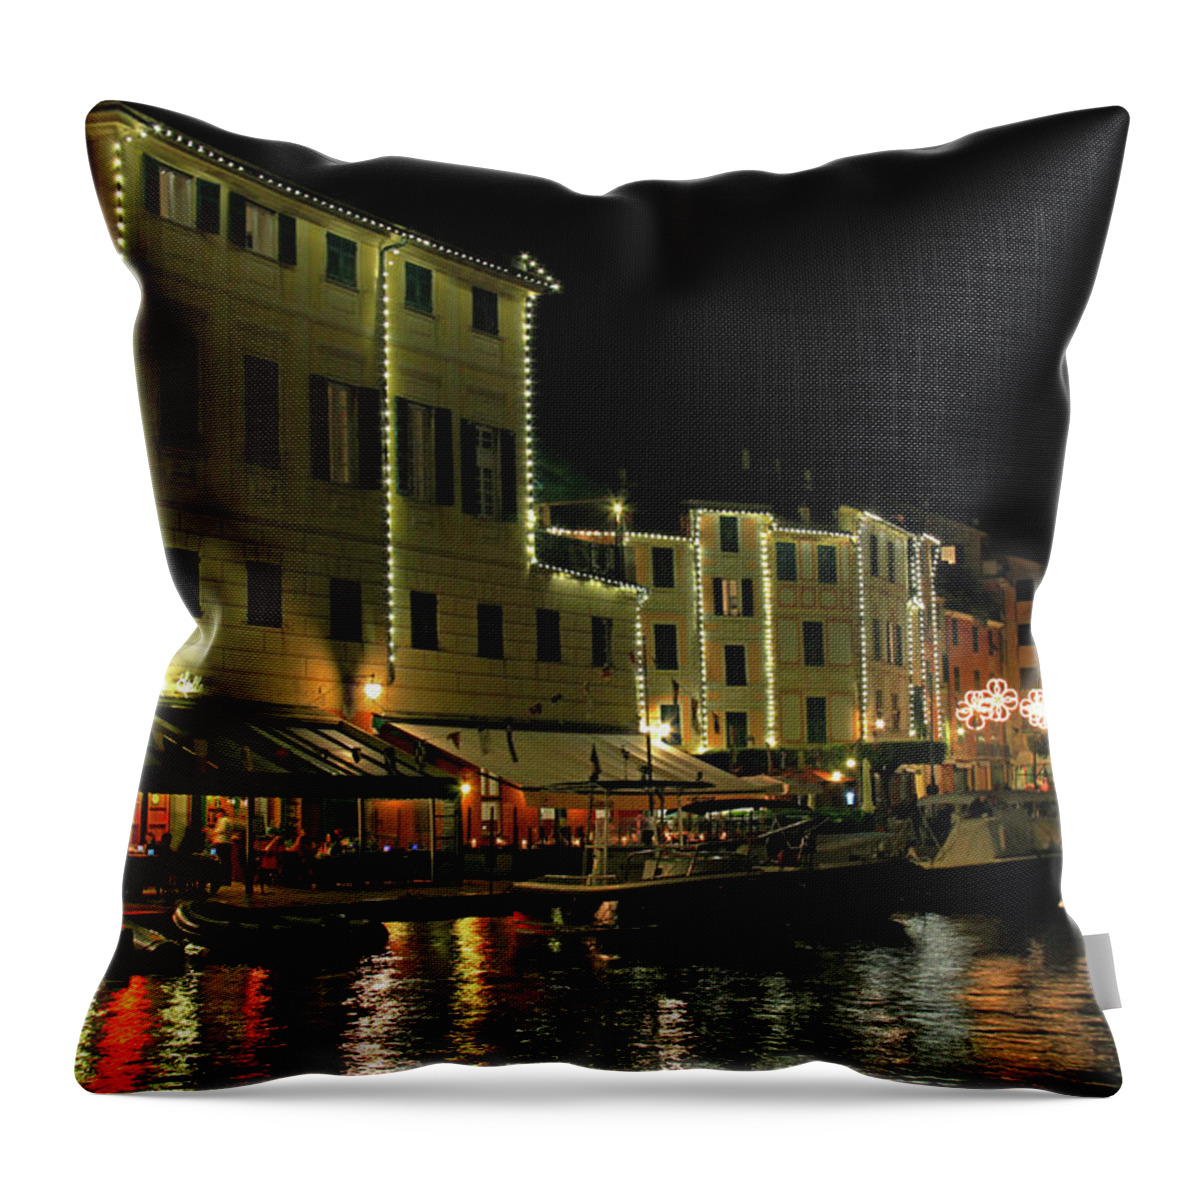 Portofino Throw Pillow featuring the photograph Portofino, Italy - Night Shot 2 by Richard Krebs